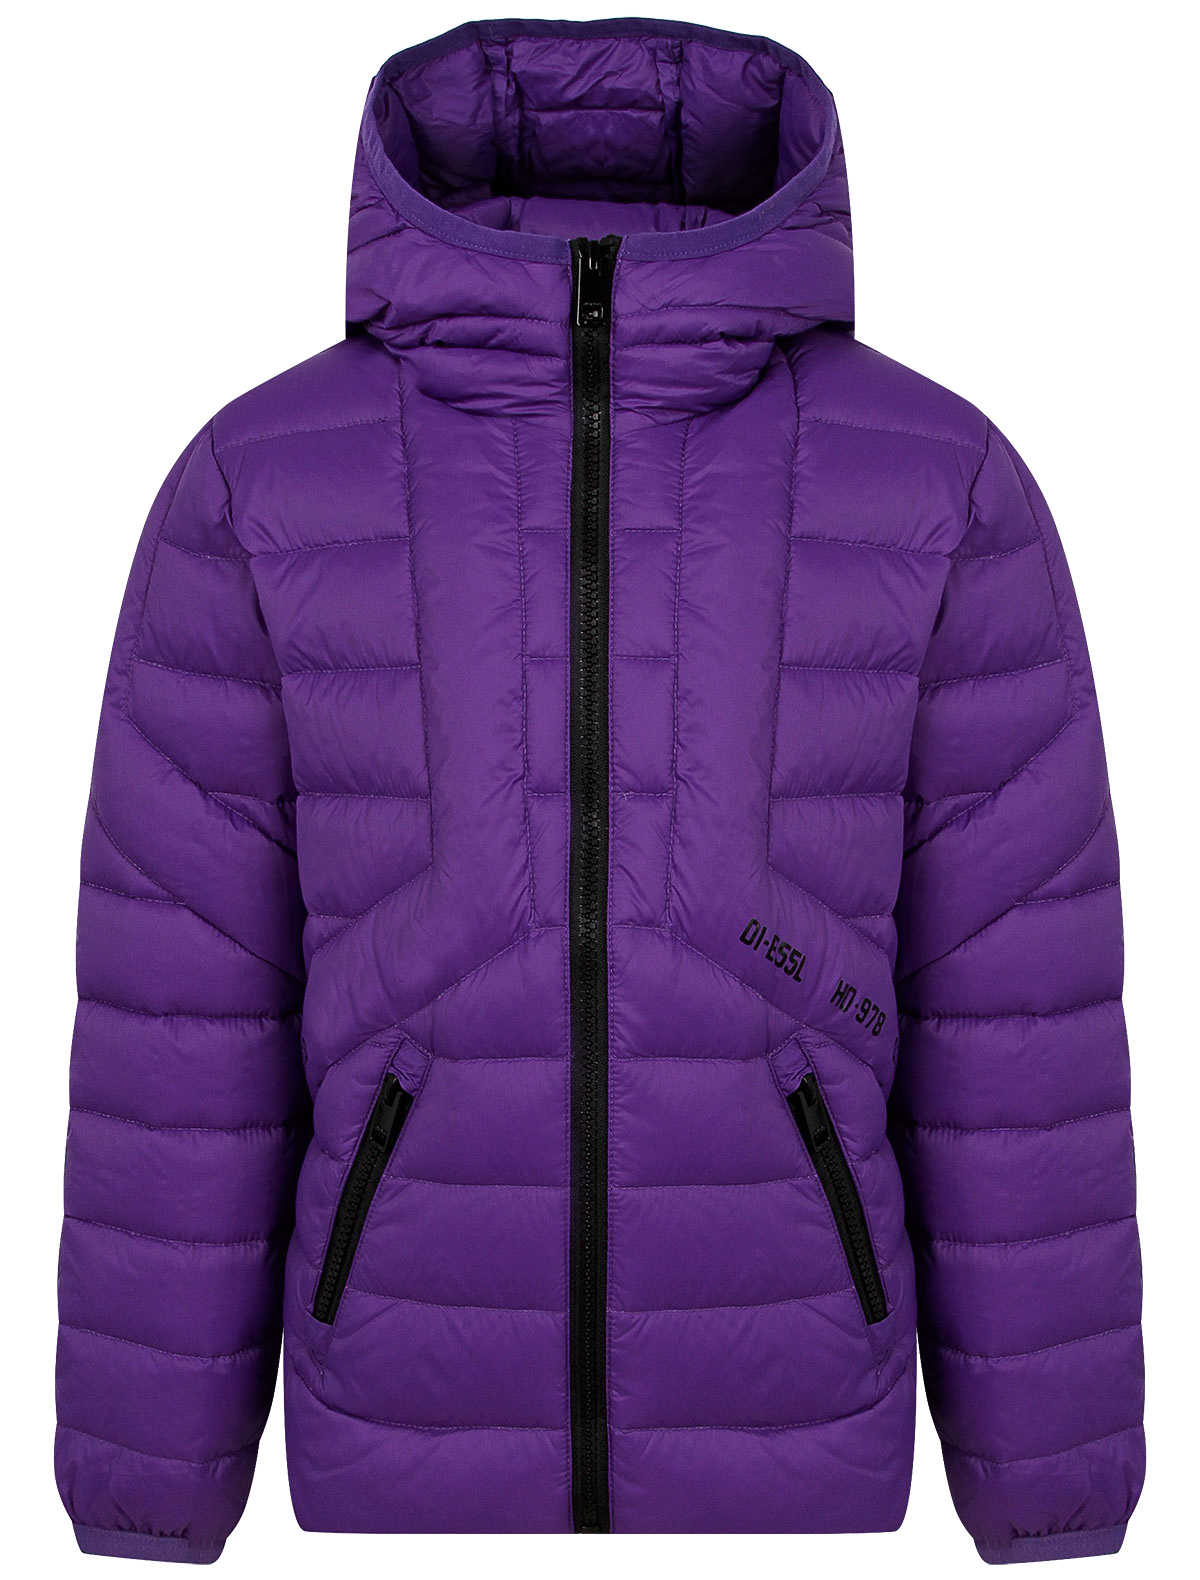 Куртка Diesel 2345493, цвет фиолетовый, размер 7 1074529181136 - фото 1